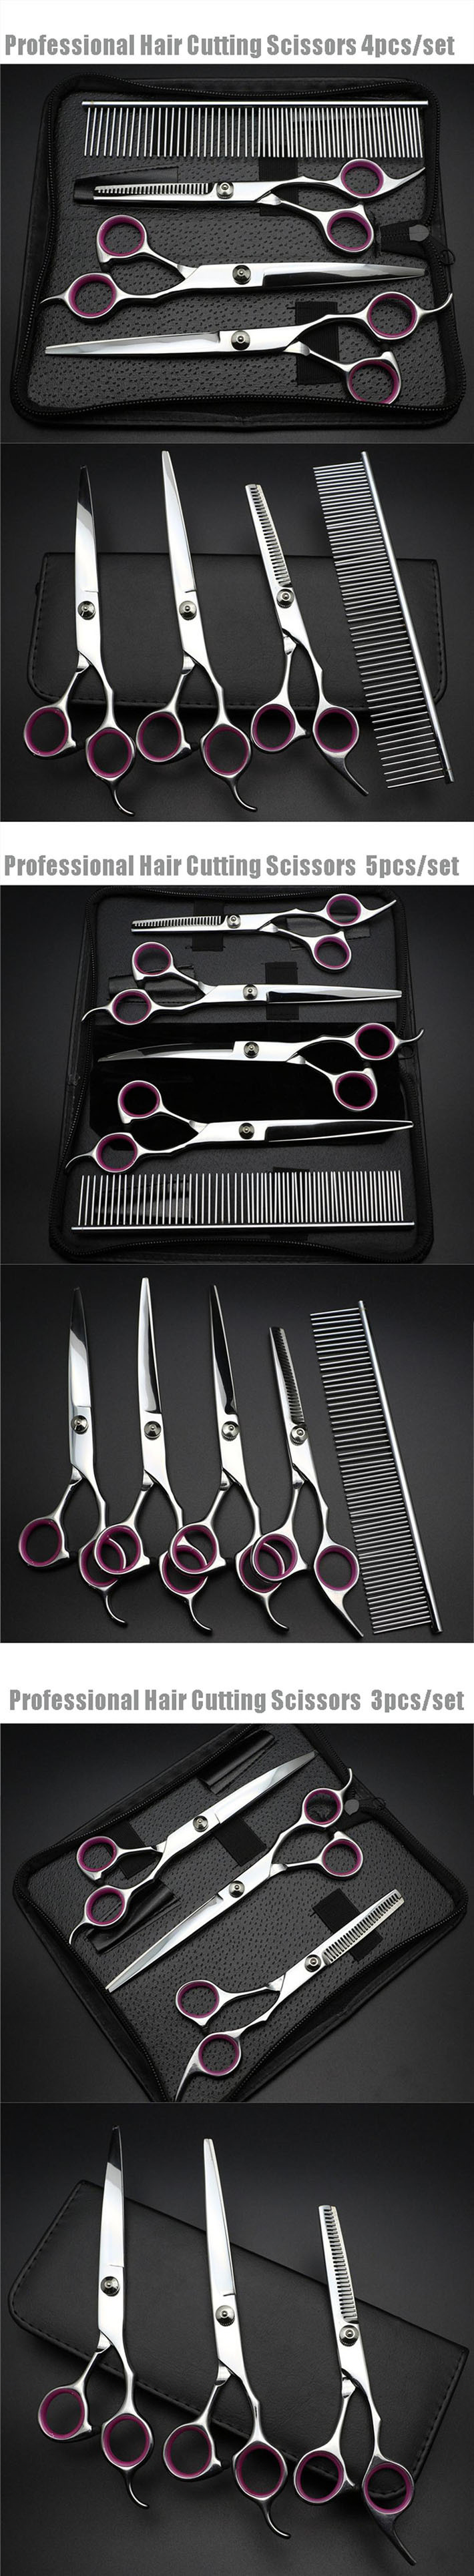 Professional Hair Cutting Scissors Stainless Steel Salon Scissors Barber Shears Pounch 3PCS / Se